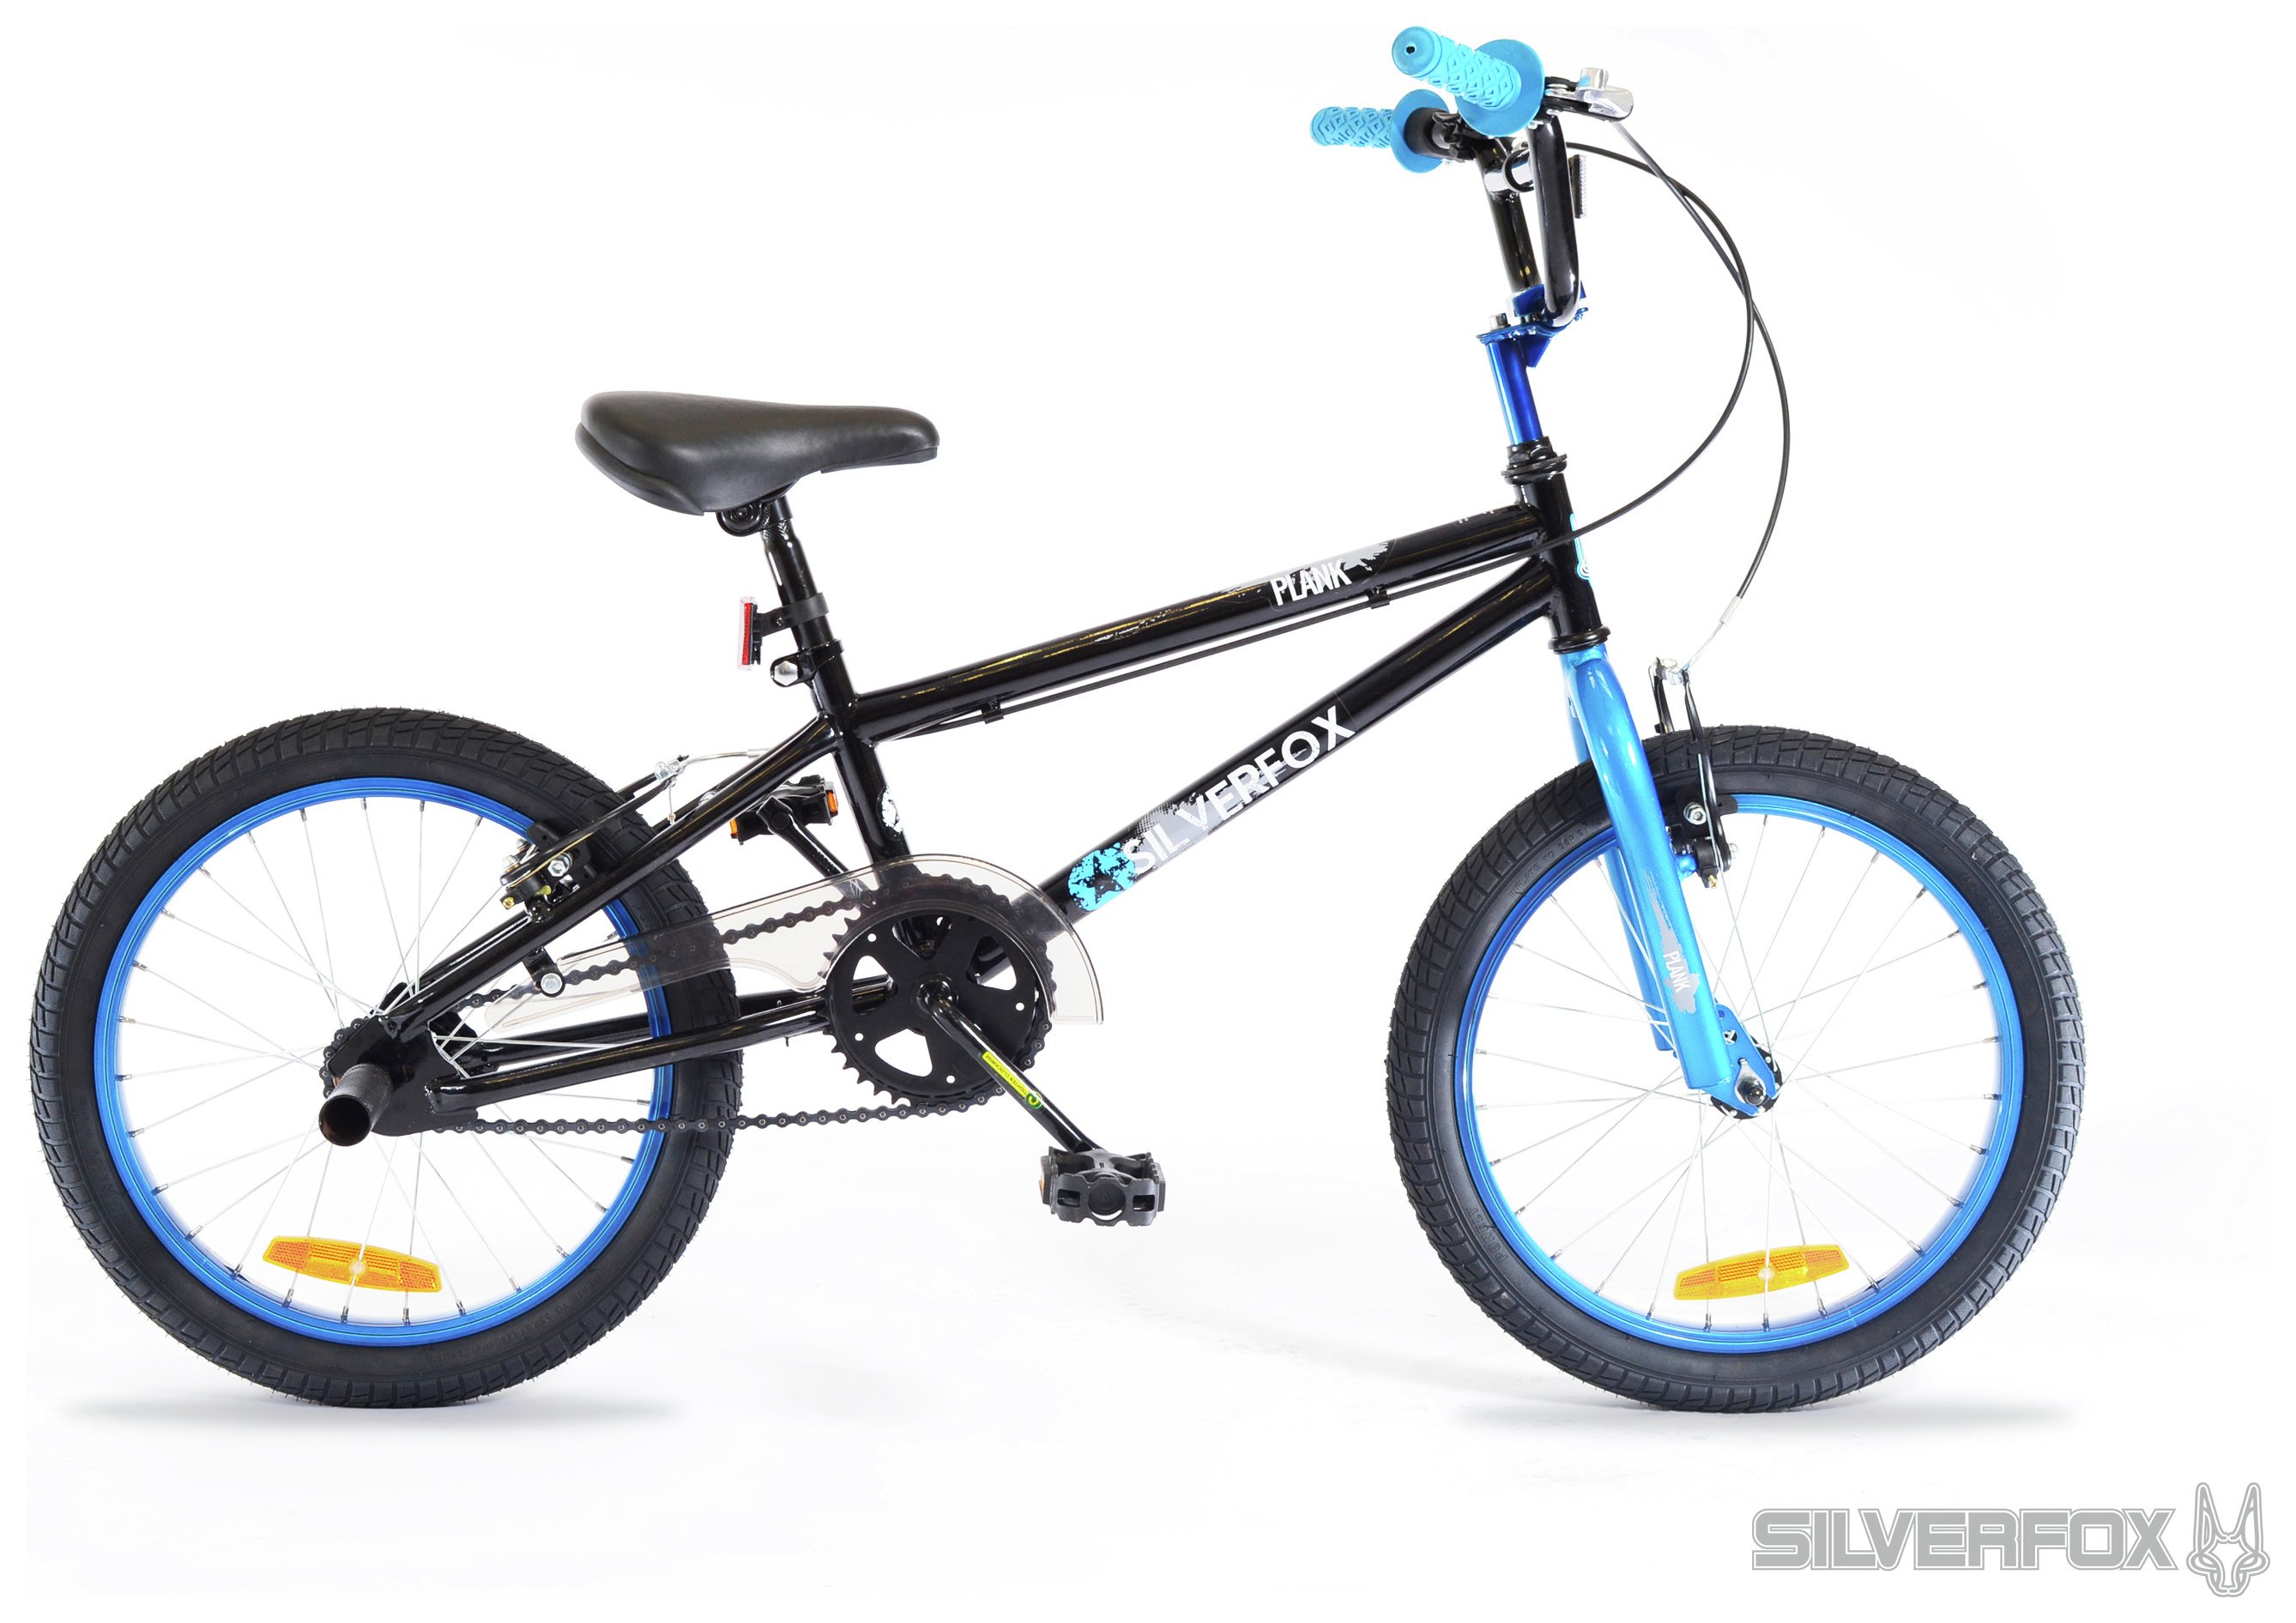 Silverfox Plank 18 Inch BMX Bike review